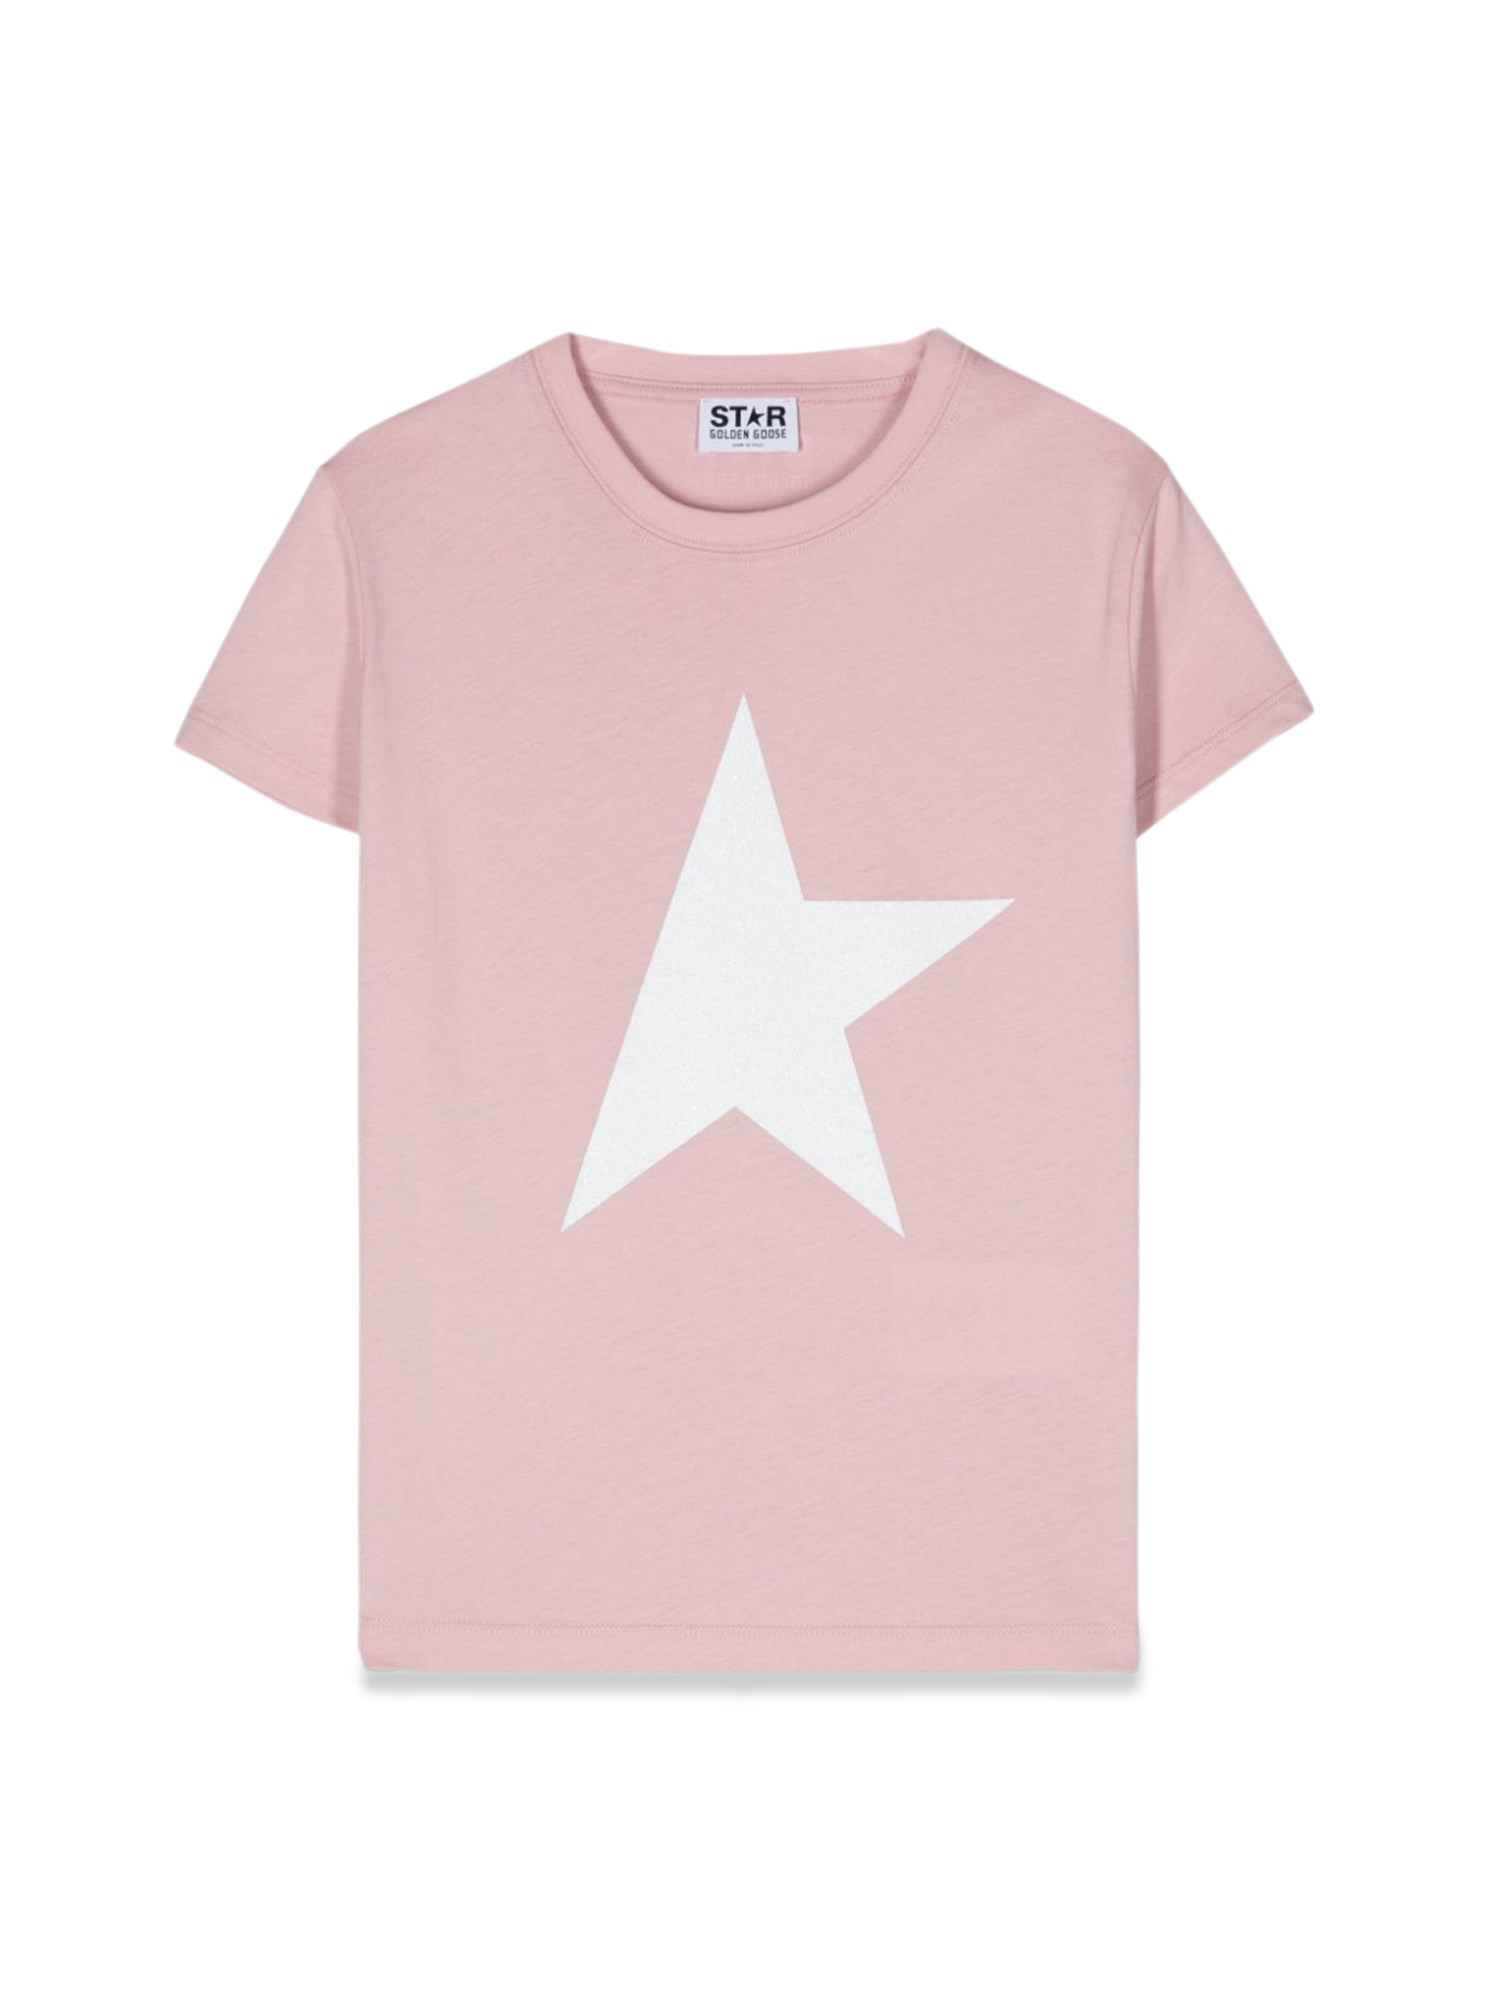 golden goose star/ girl's t-shirt s/s logo/ big star printed/ logo